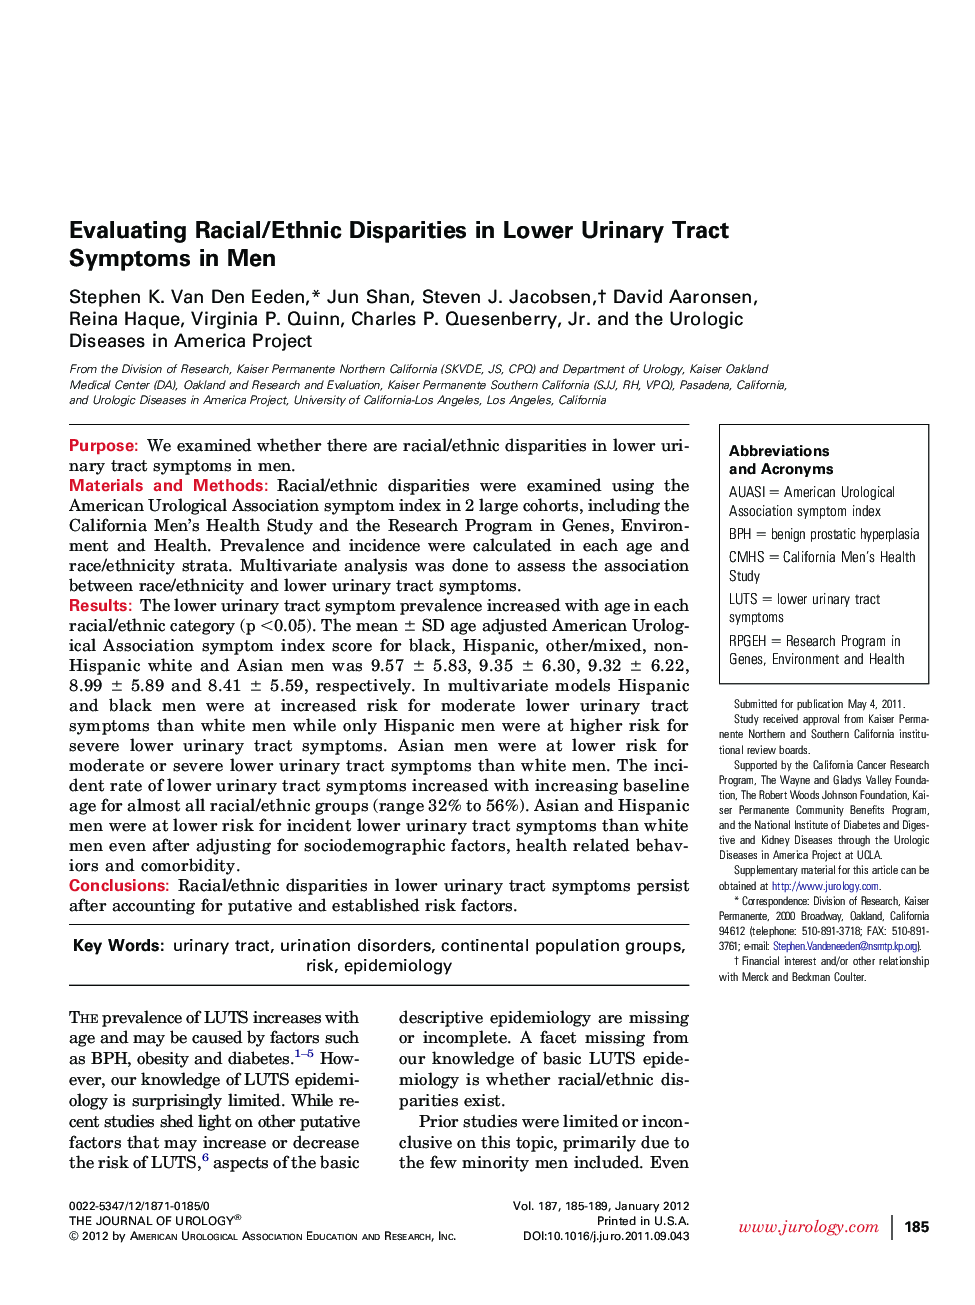 Evaluating Racial/Ethnic Disparities in Lower Urinary Tract Symptoms in Men 